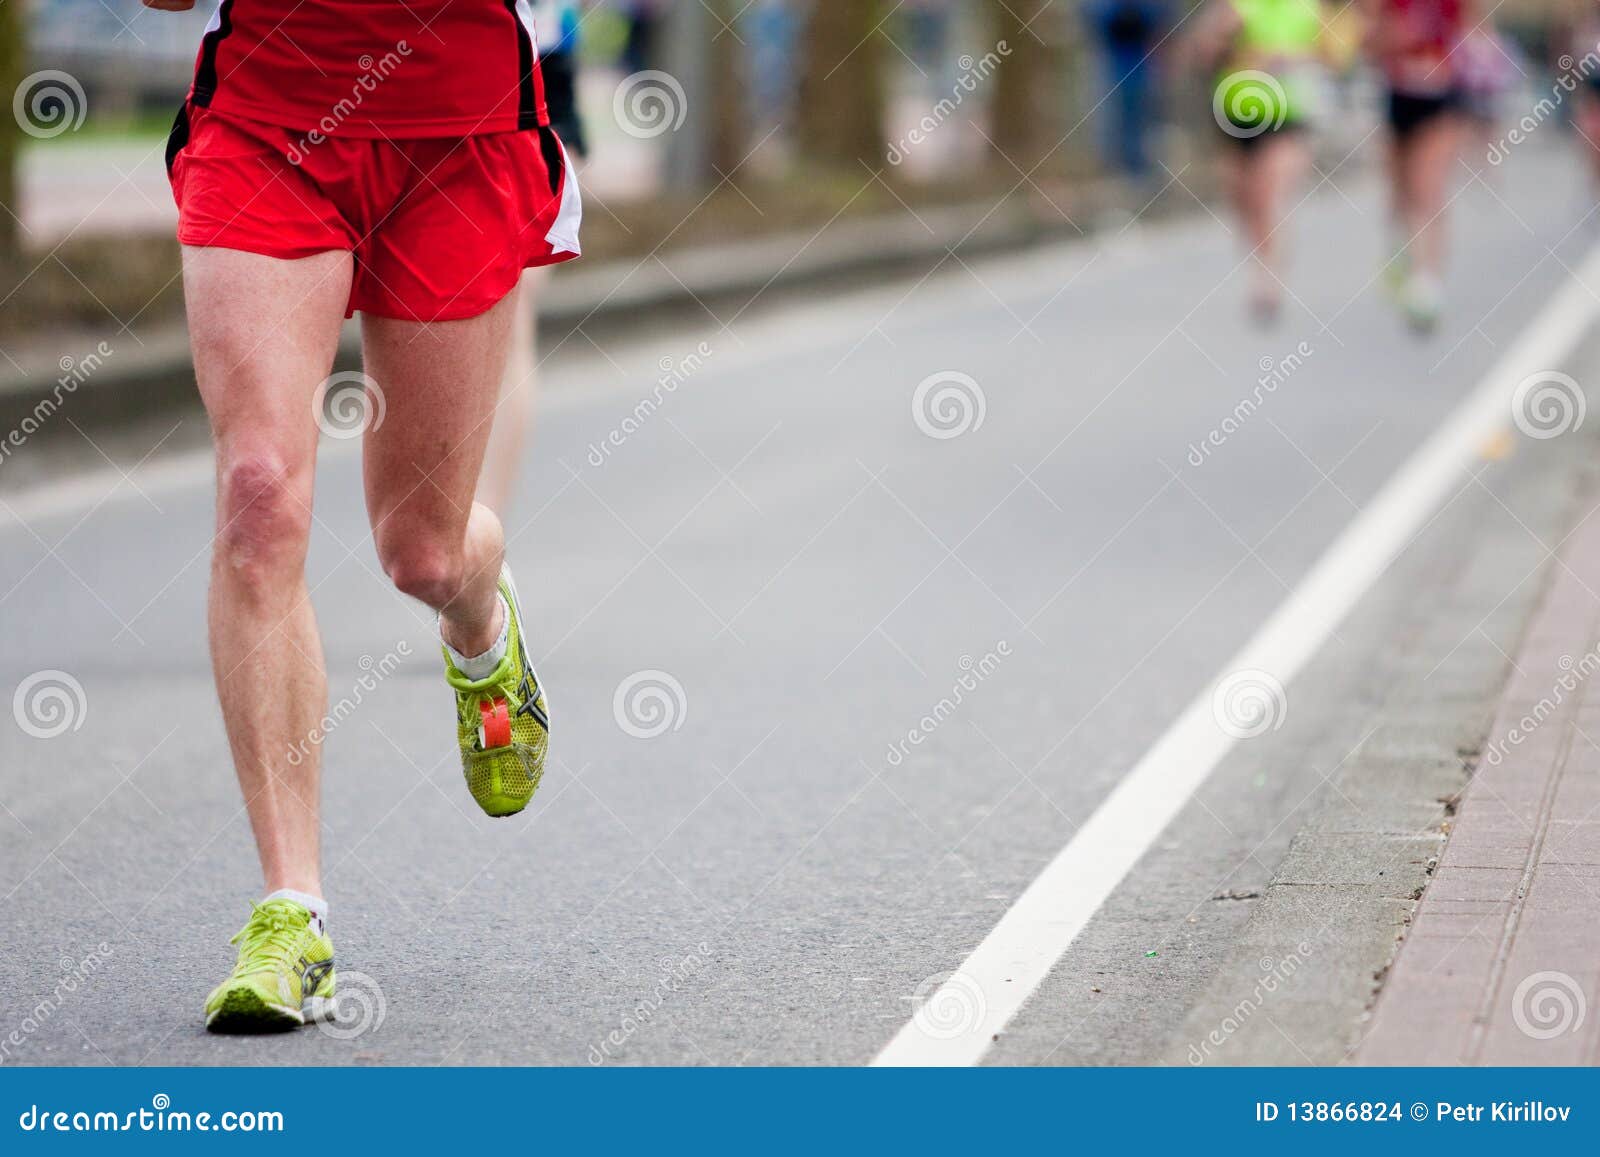 Marathon runner stock photo. Image of running, motion - 13866824